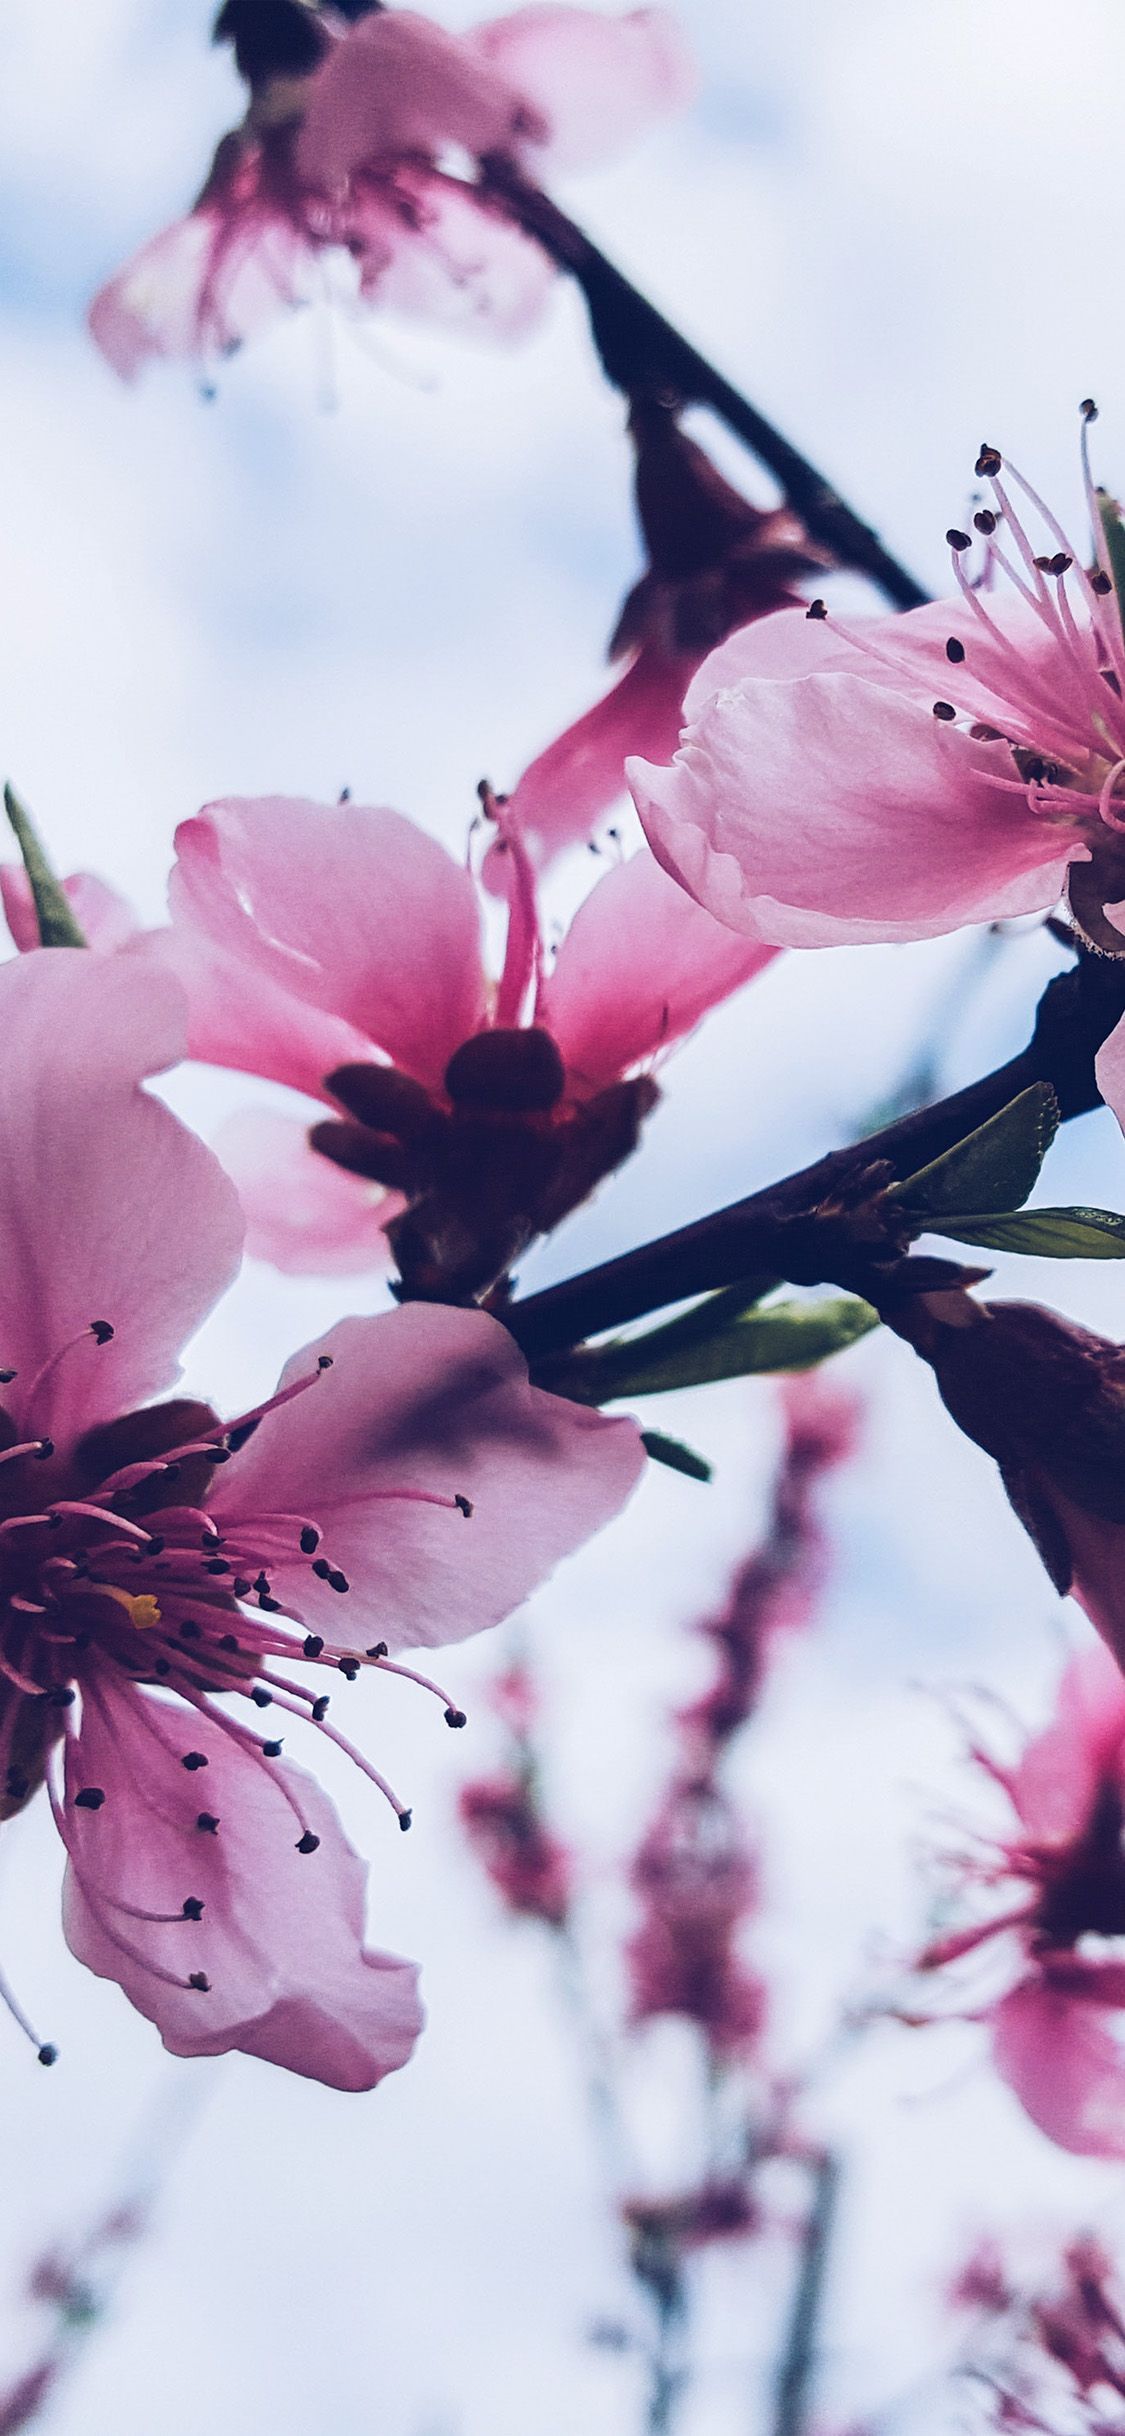 iPhone X wallpaper. flower blossom cherry spring nature. Flower background iphone, Cherry blossom wallpaper, Nature background iphone